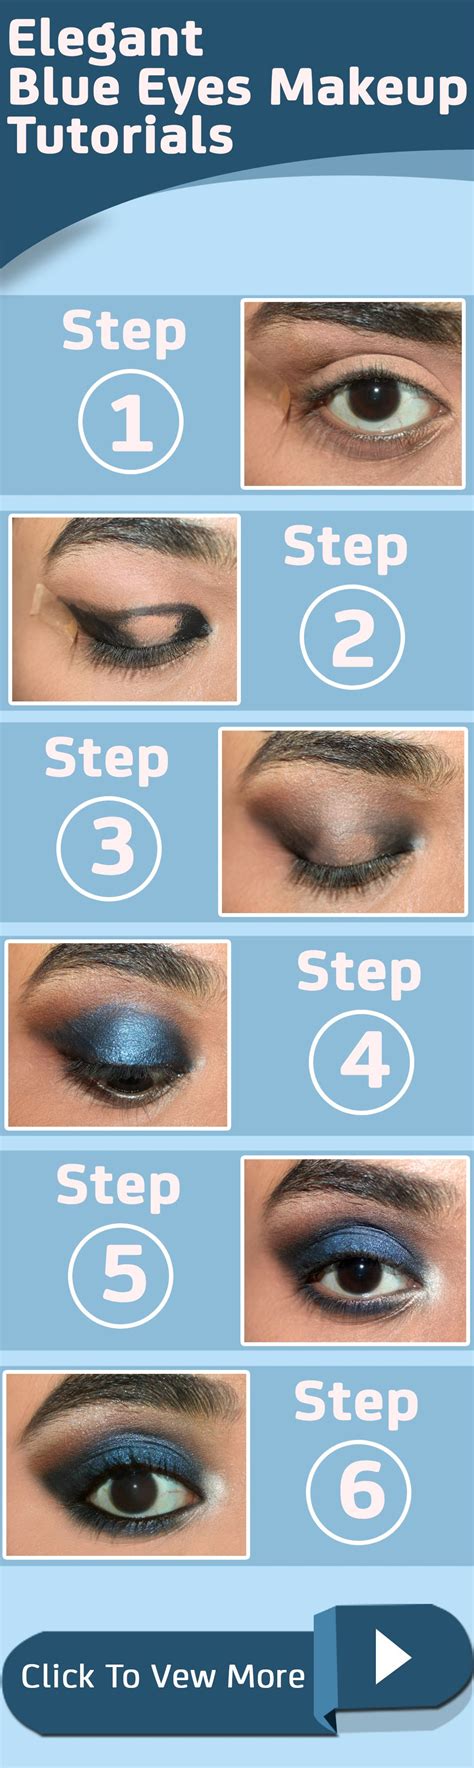 Elegant Blue Eyes Makeup Step By Step Tutorial With Images Makeup